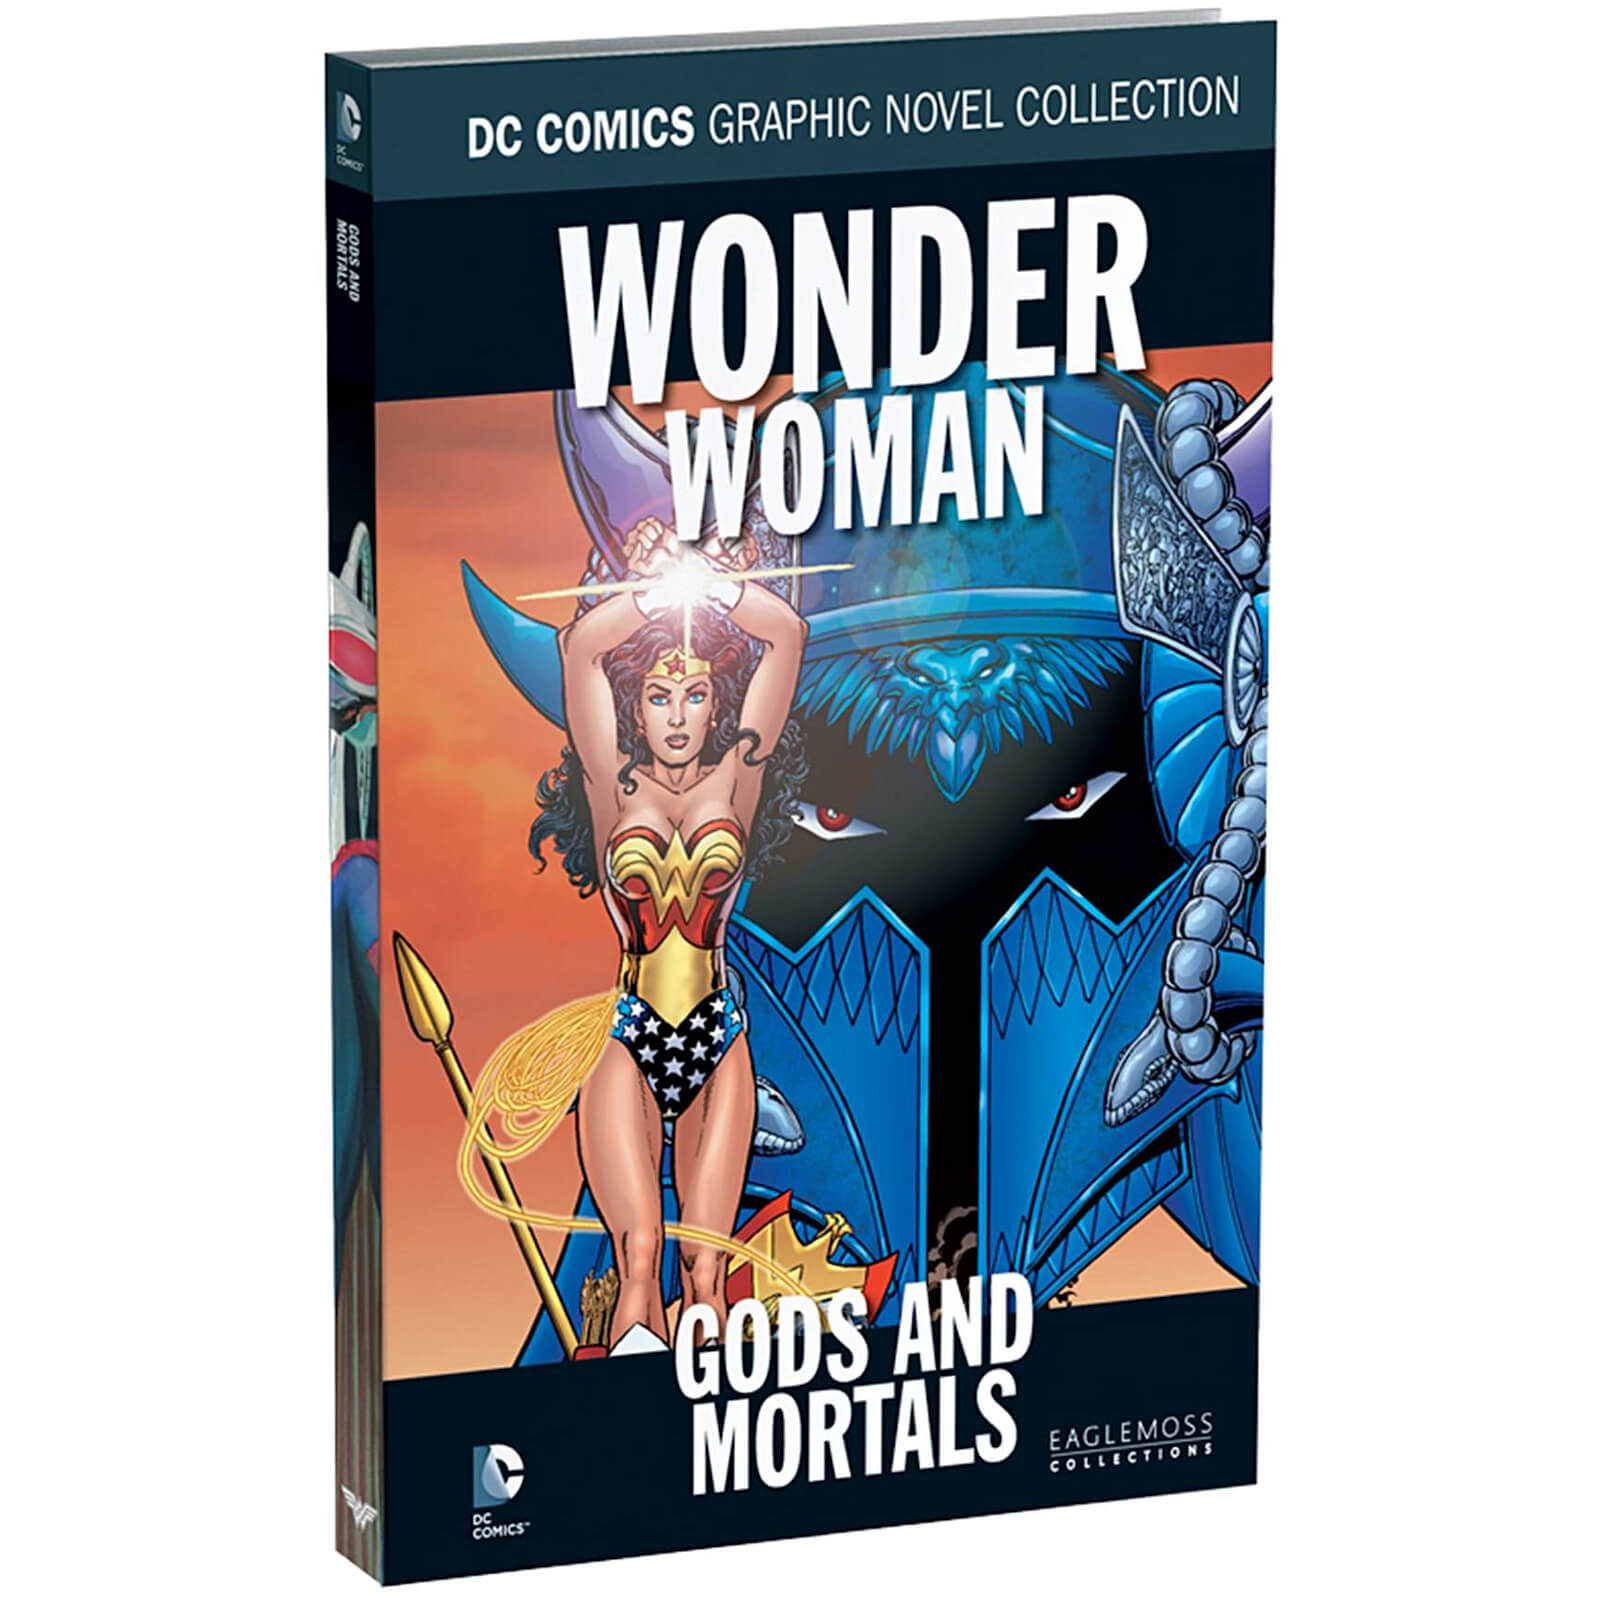 DC Comics Graphic Novel Collection - Wonder Woman: Gods and Mortals - Volume 50